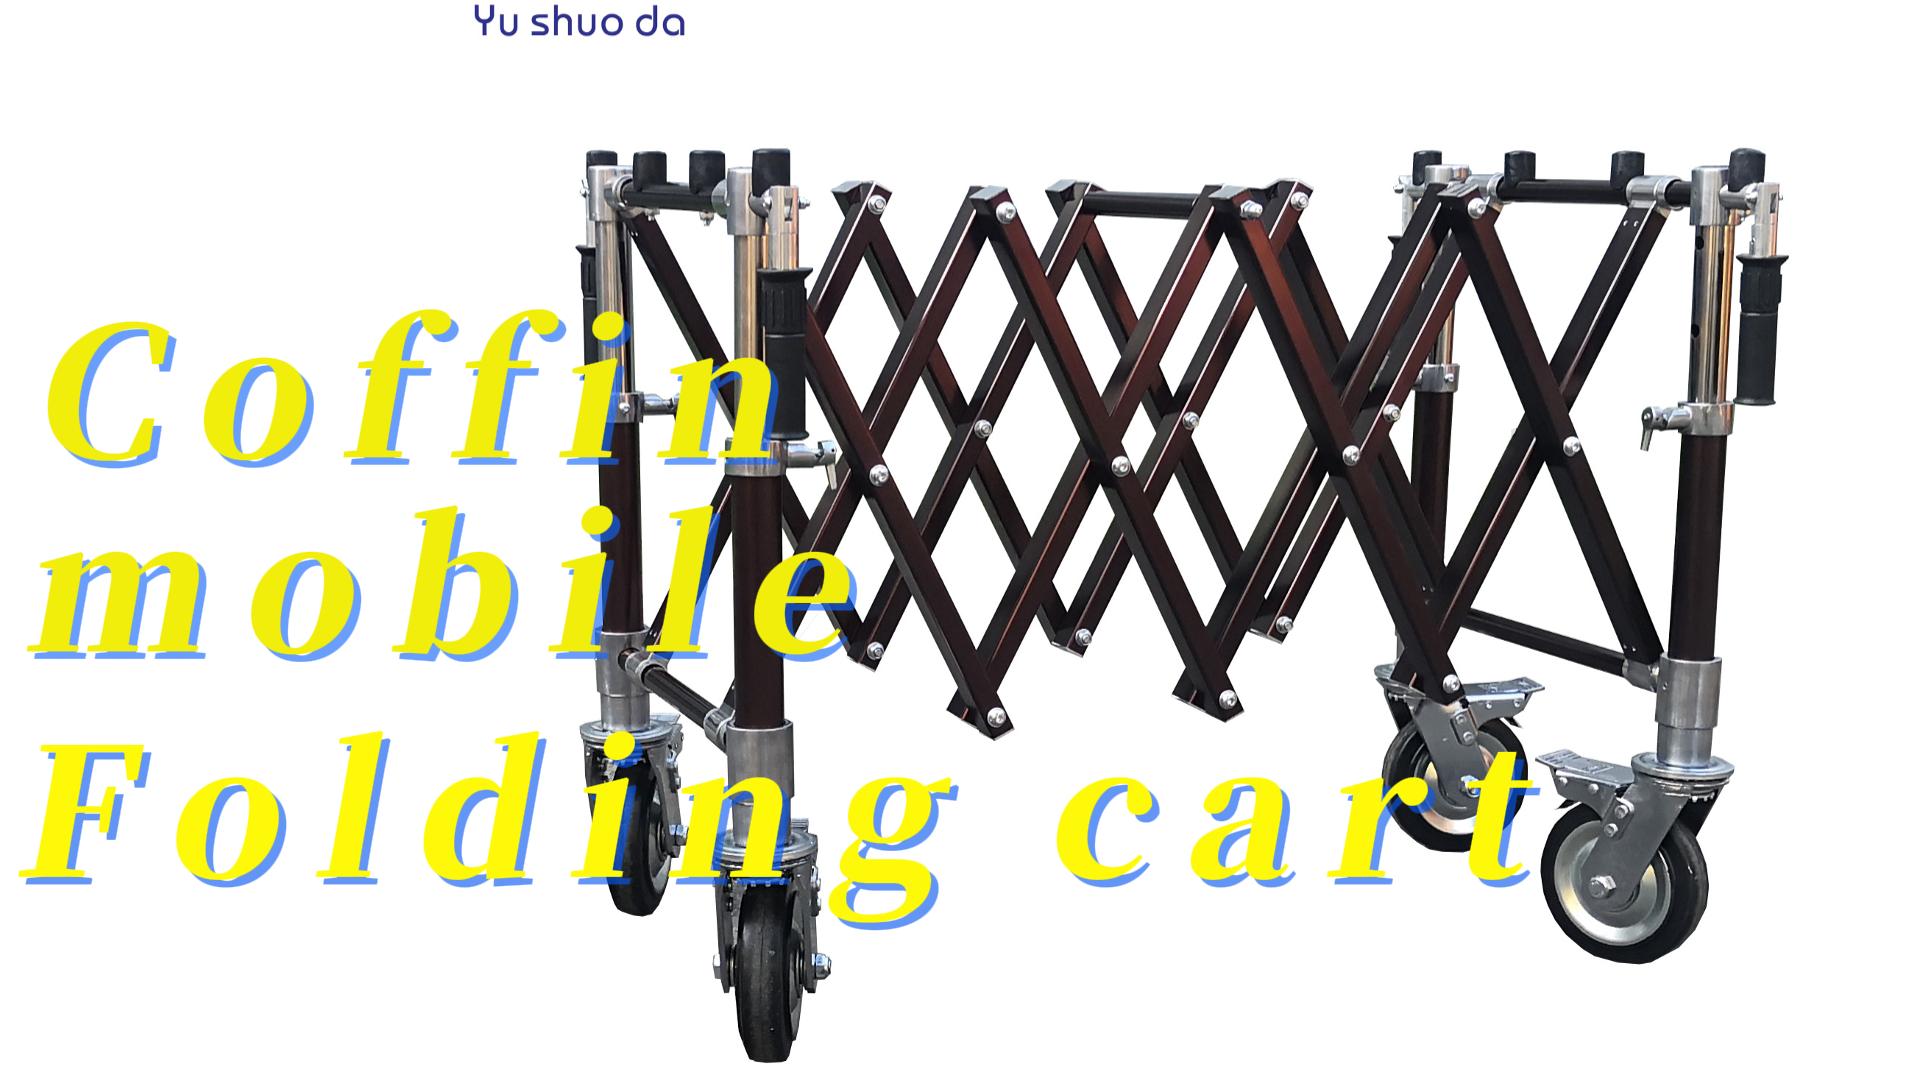 YUSHUODA high-strength aluminum coffin transport cart with handle